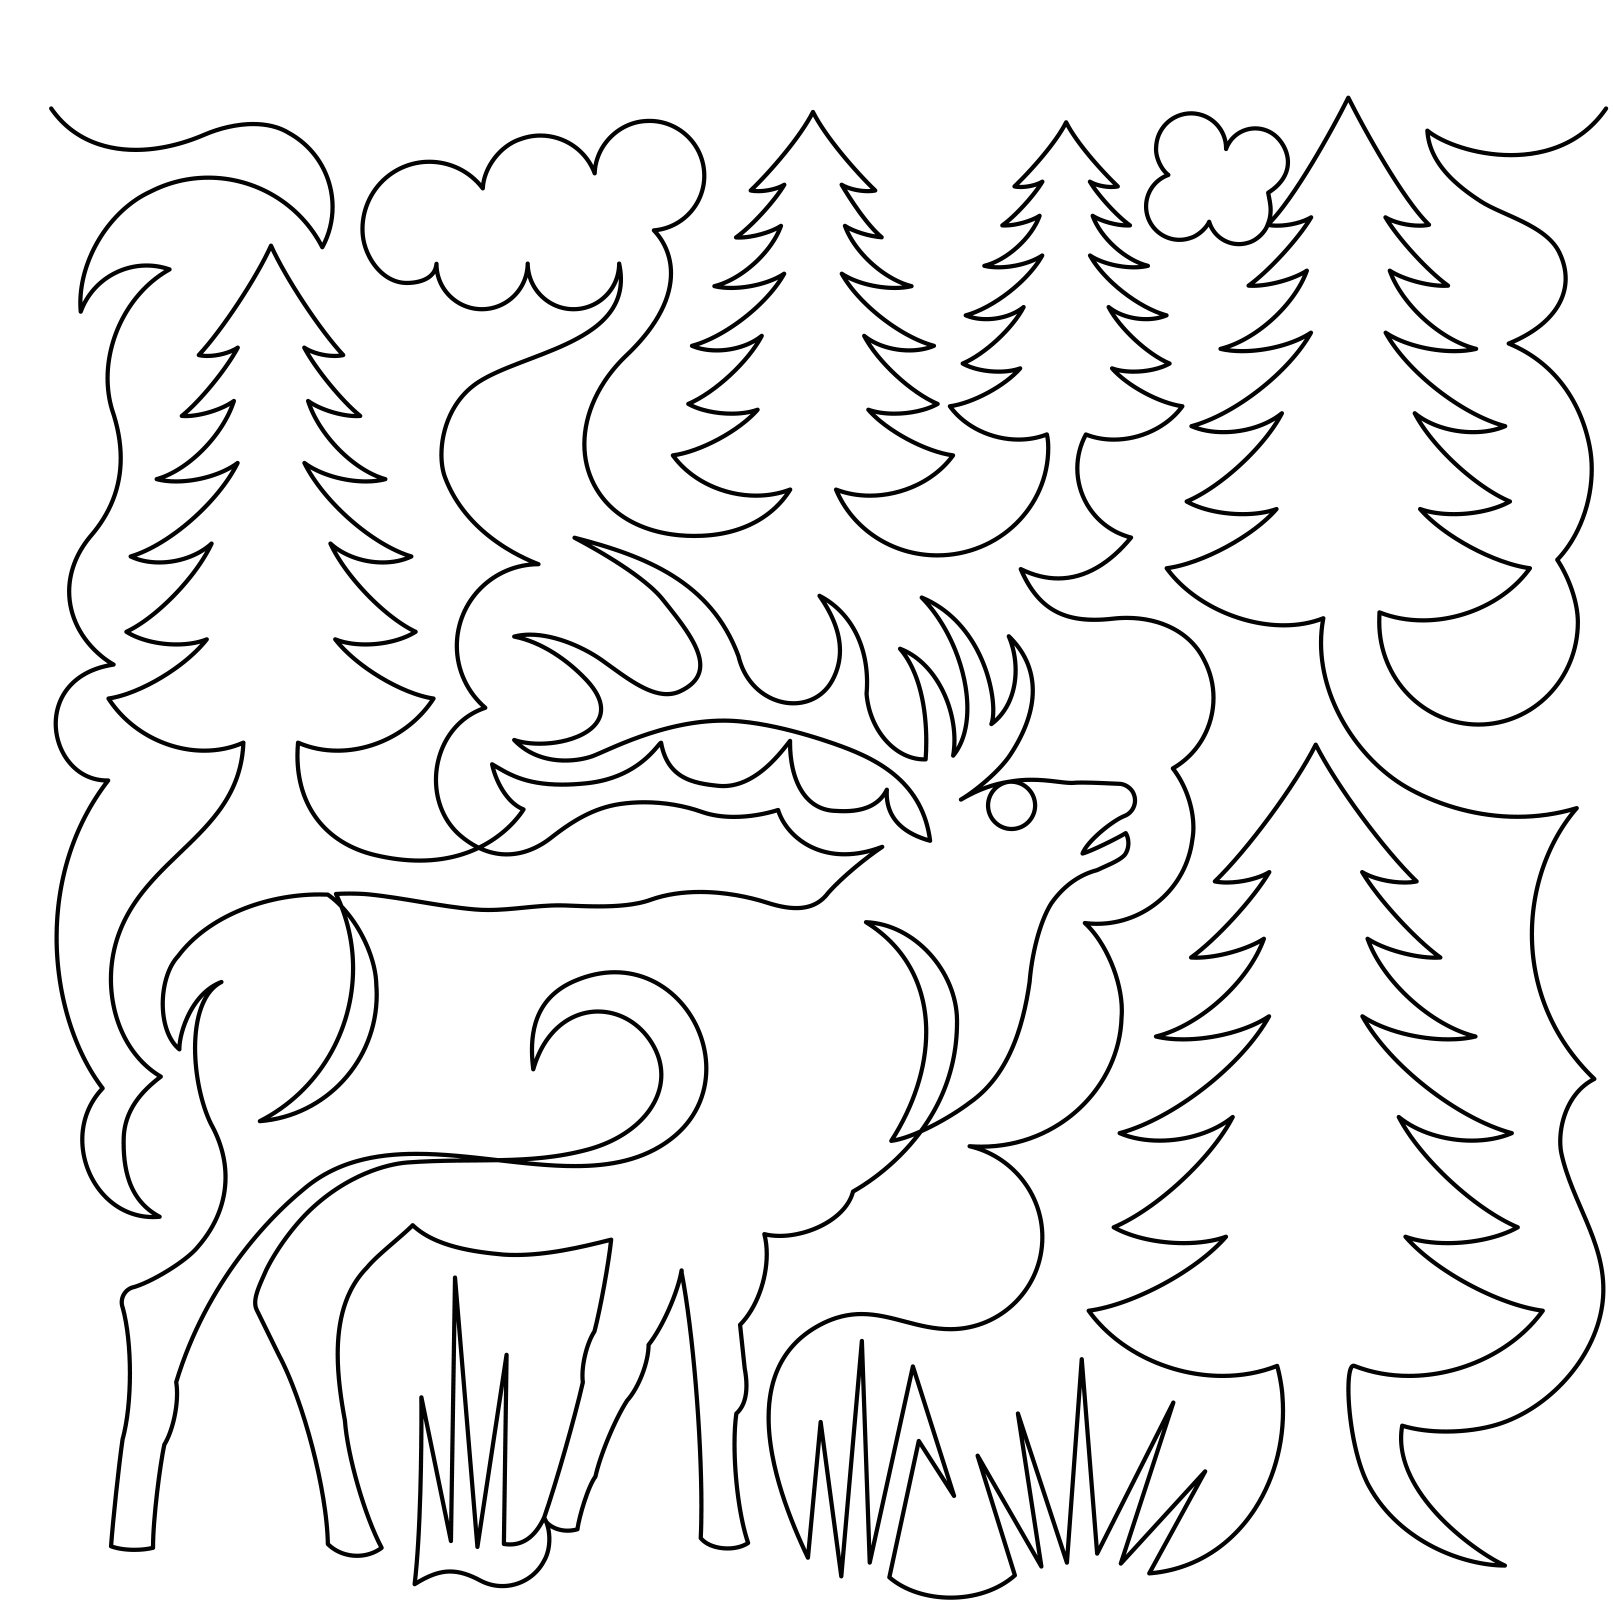 Elk and Pines